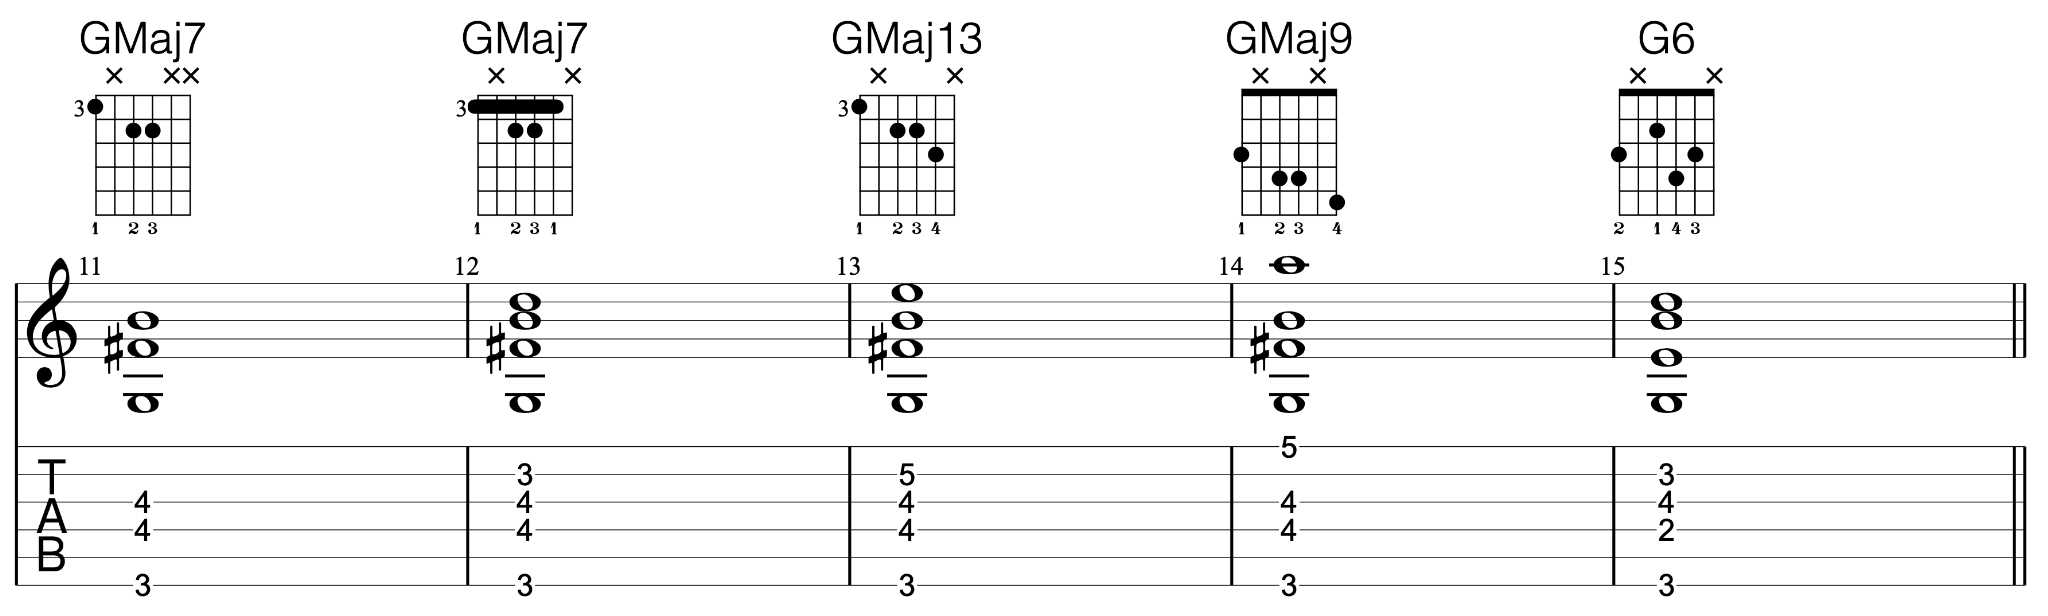 Gmaj7 beginner jazz chords guitar